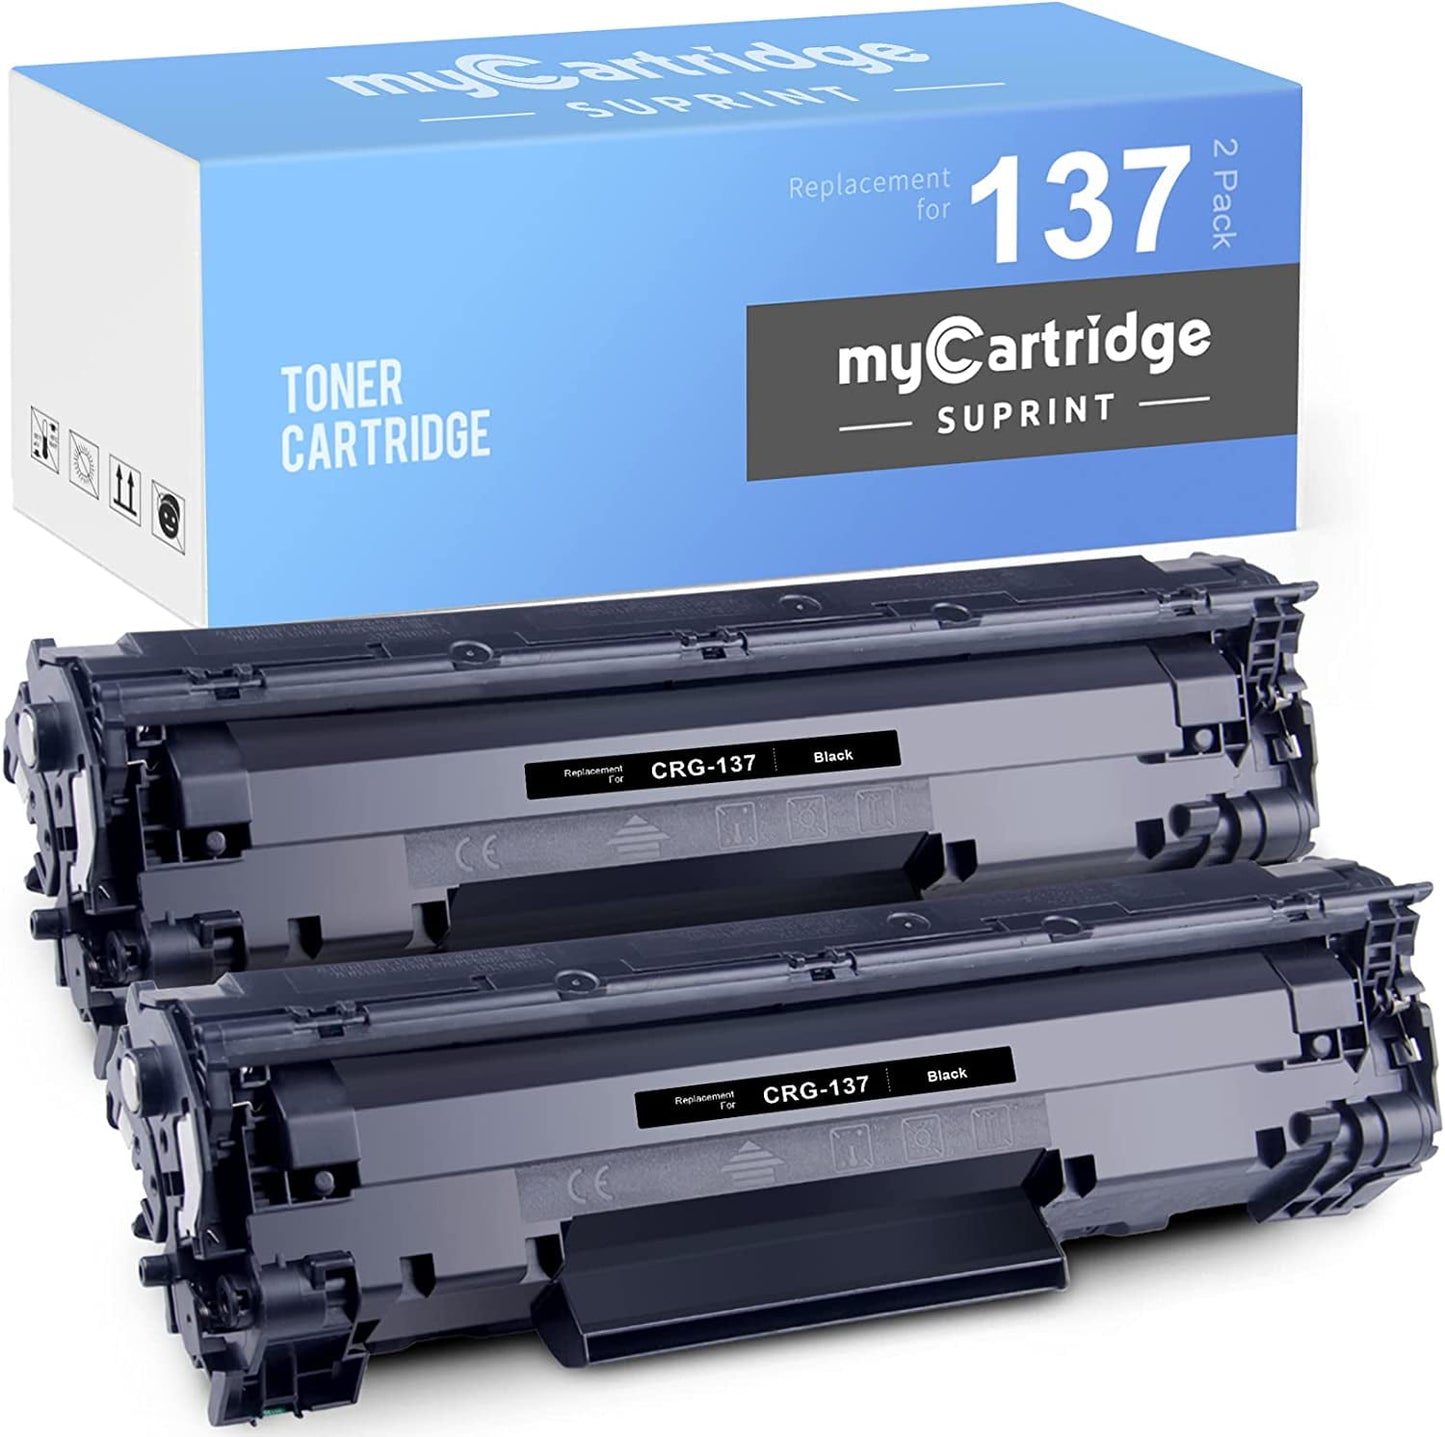 137 Black Toner Cartridges Compatible with Canon CRG137 for MF236n D570 LBP151dw MF247dw MF249dw MF232w MF242dw MF244dw MF216n MF227dw MF212w Printer, 2 Black